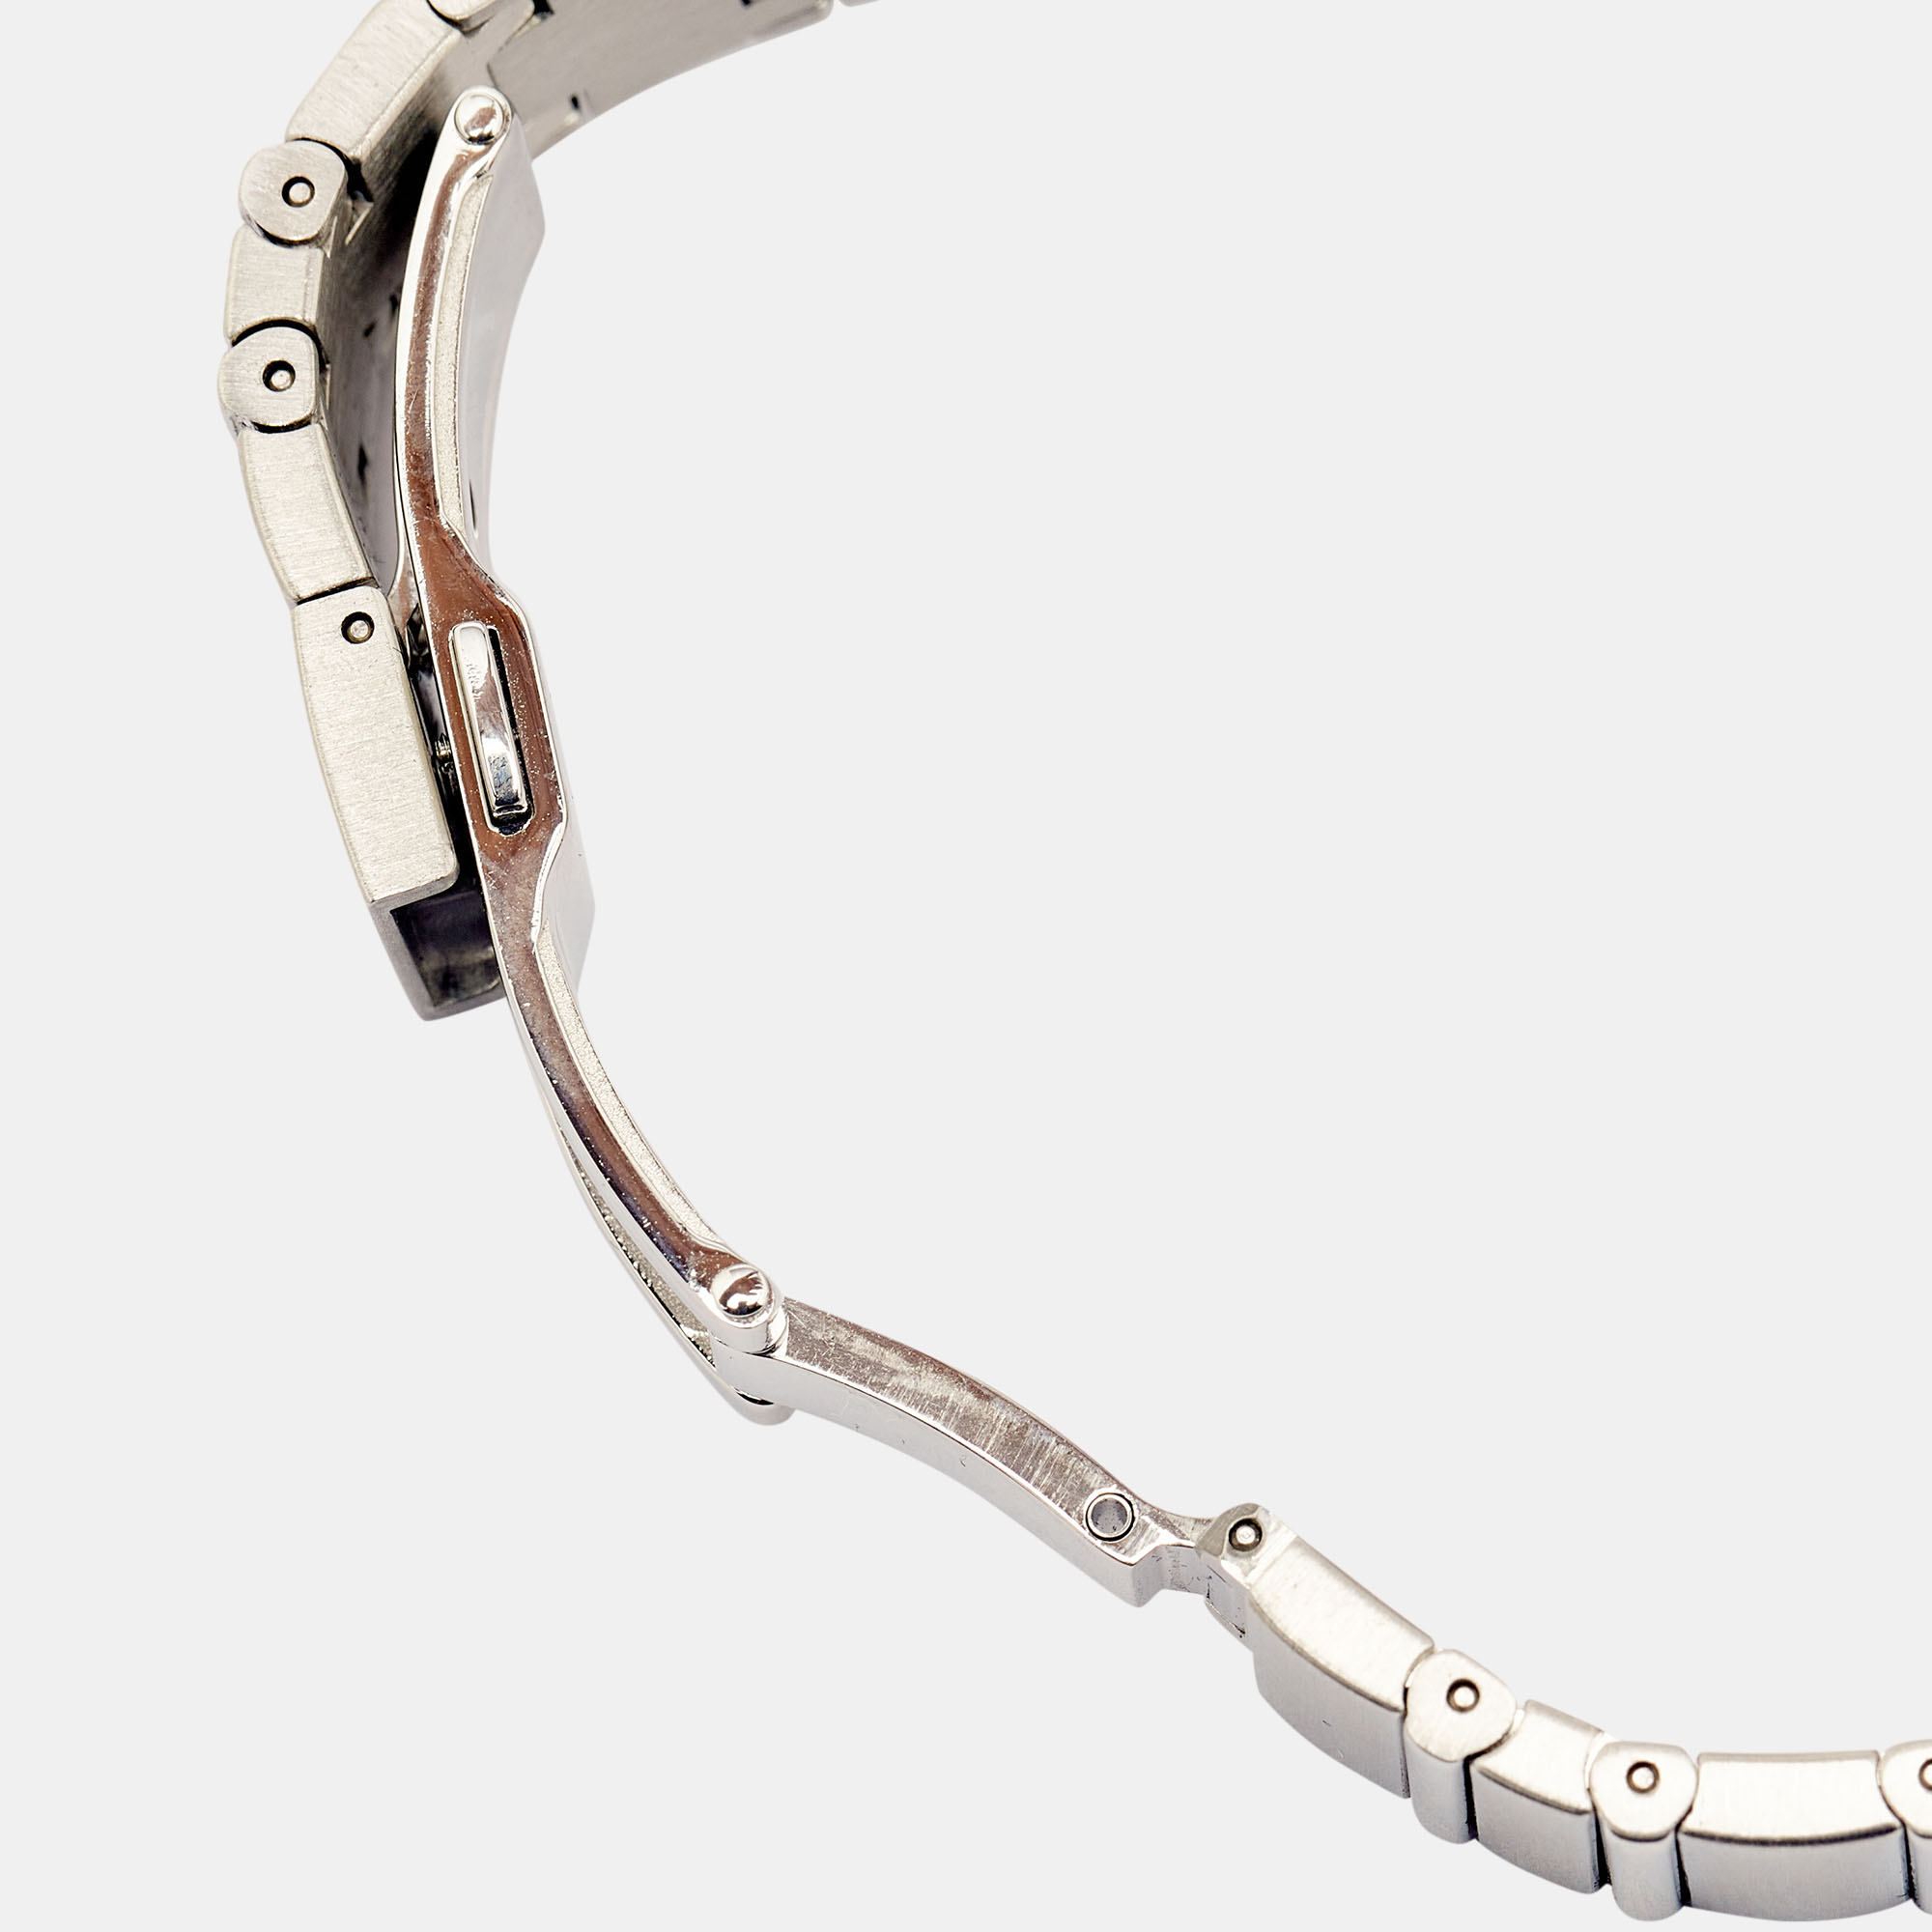 Omega MOP Diamonds Stainless Steel Constellation 123.15.24.60.05.001 Women's Wristwatch 24 Mm